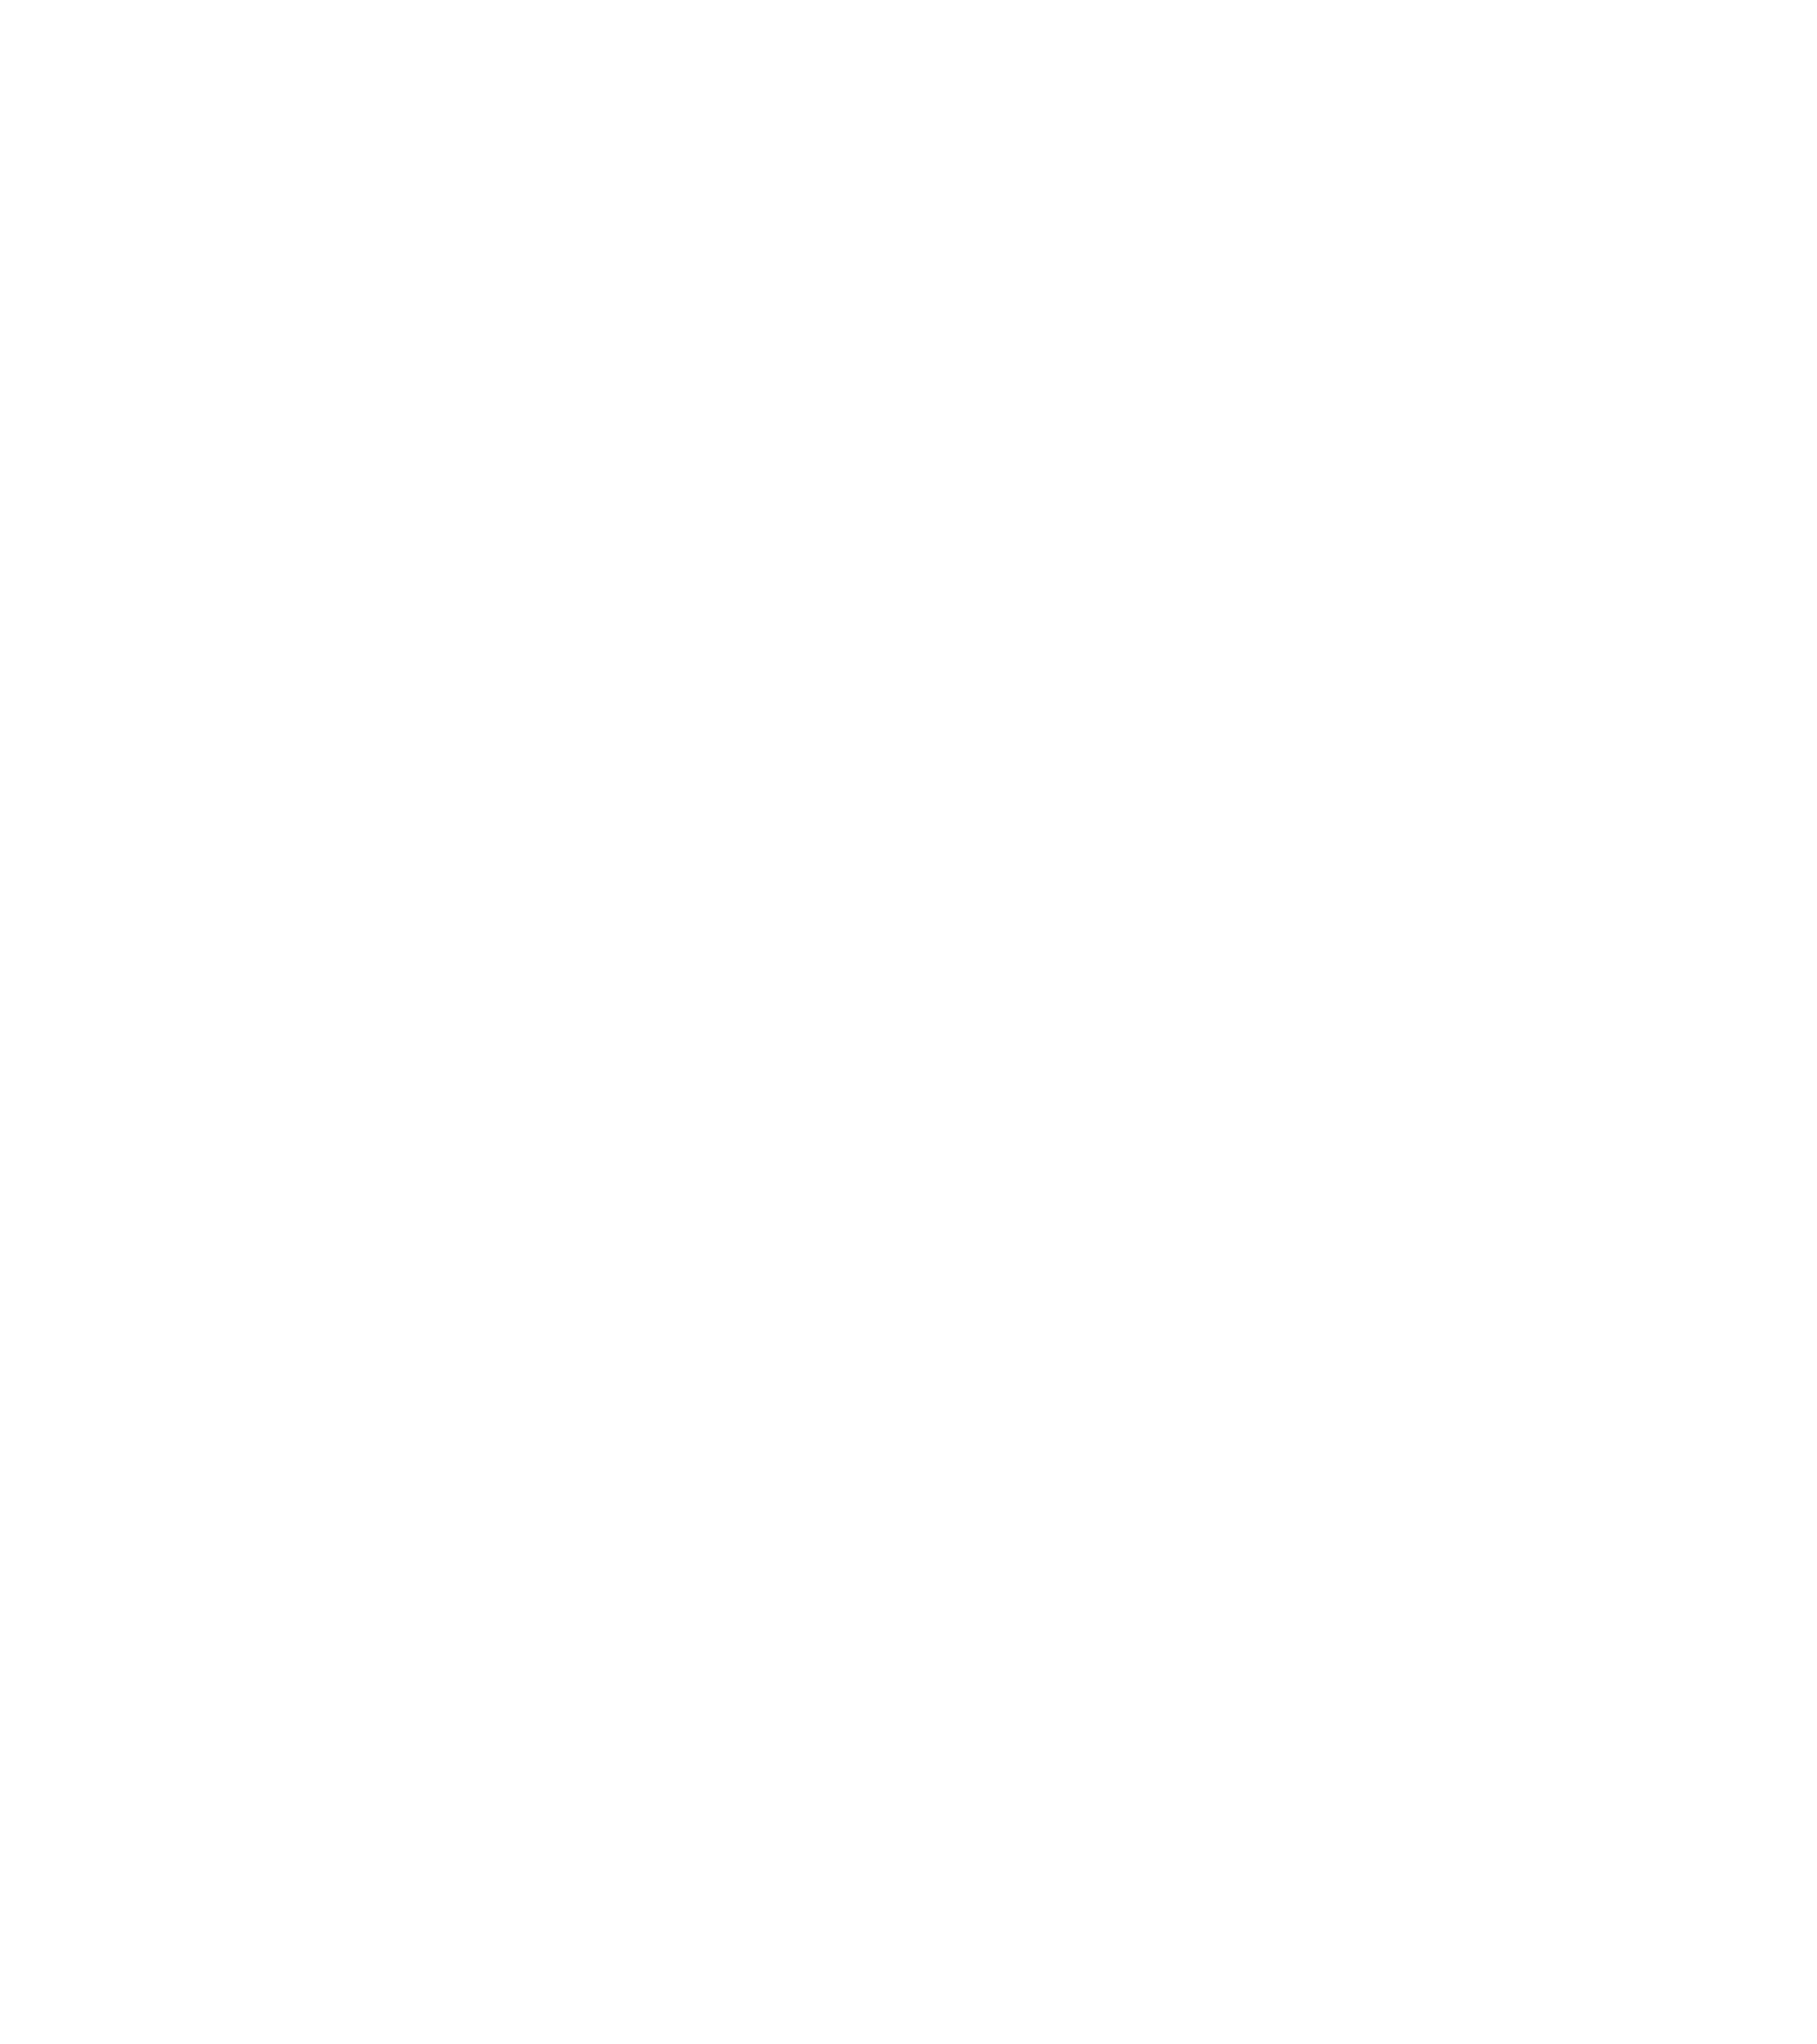 locksmiths-ltd-high-resolution-logo-white-transparent